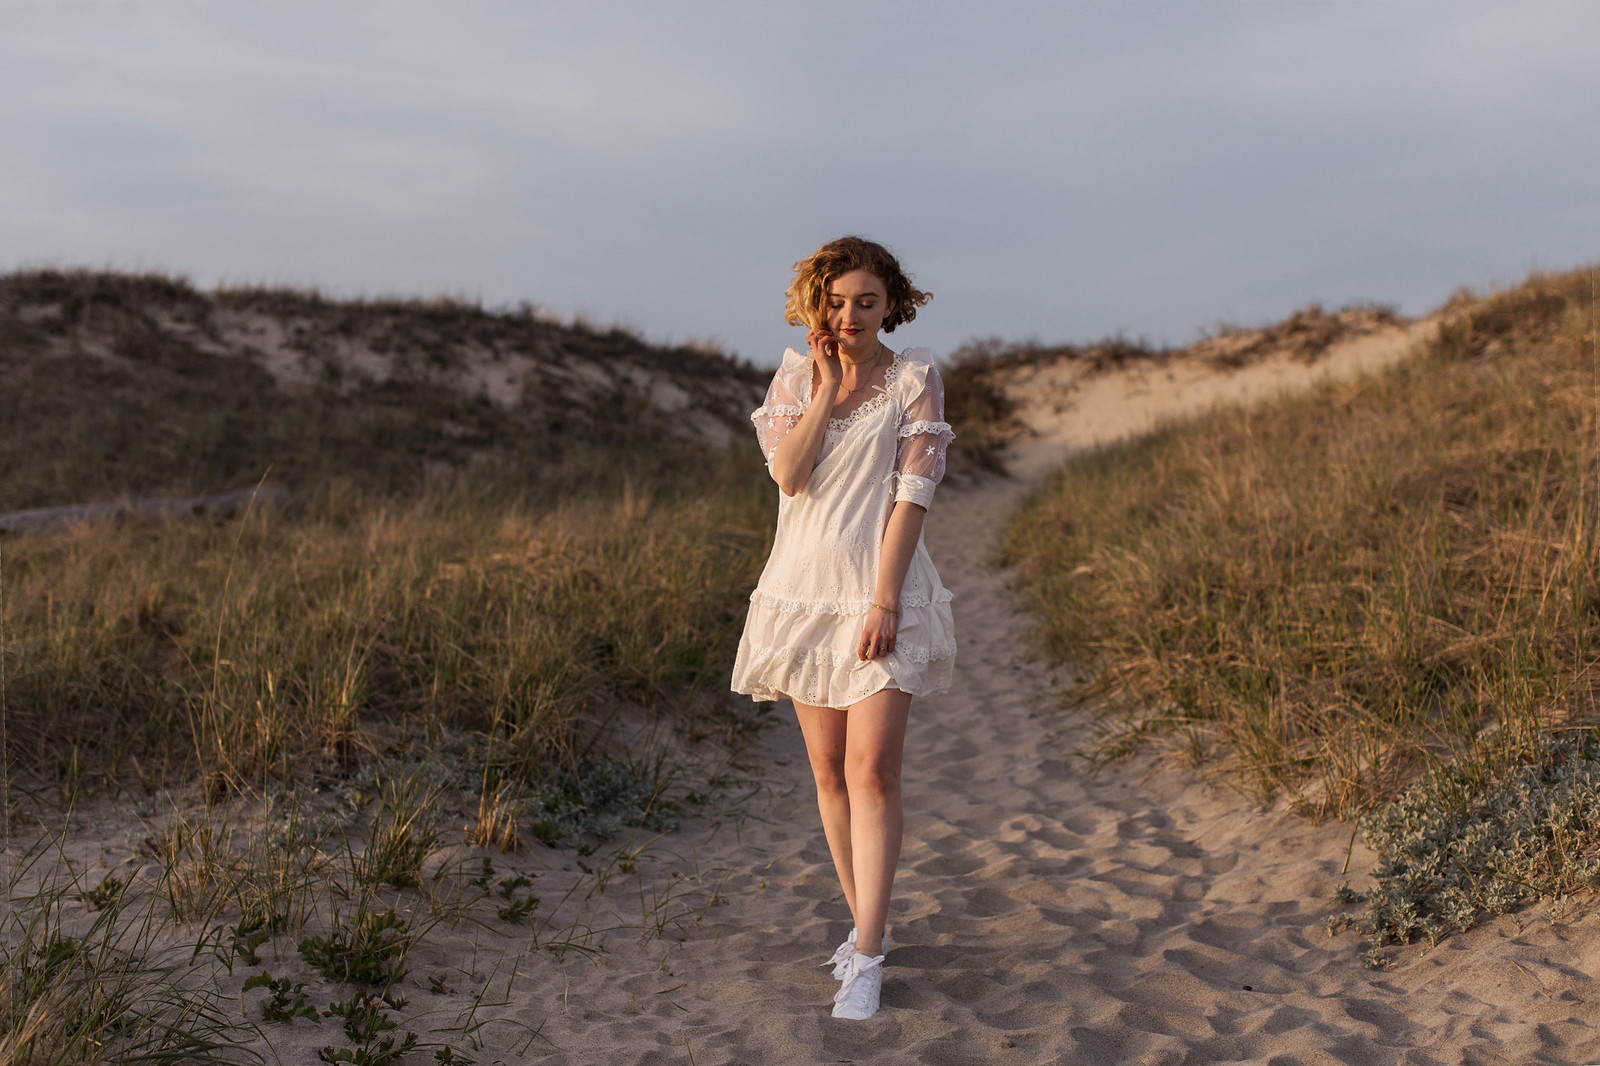 White Lace Dress in Beach Sand Dunes on juliettelaura.blogspot.com